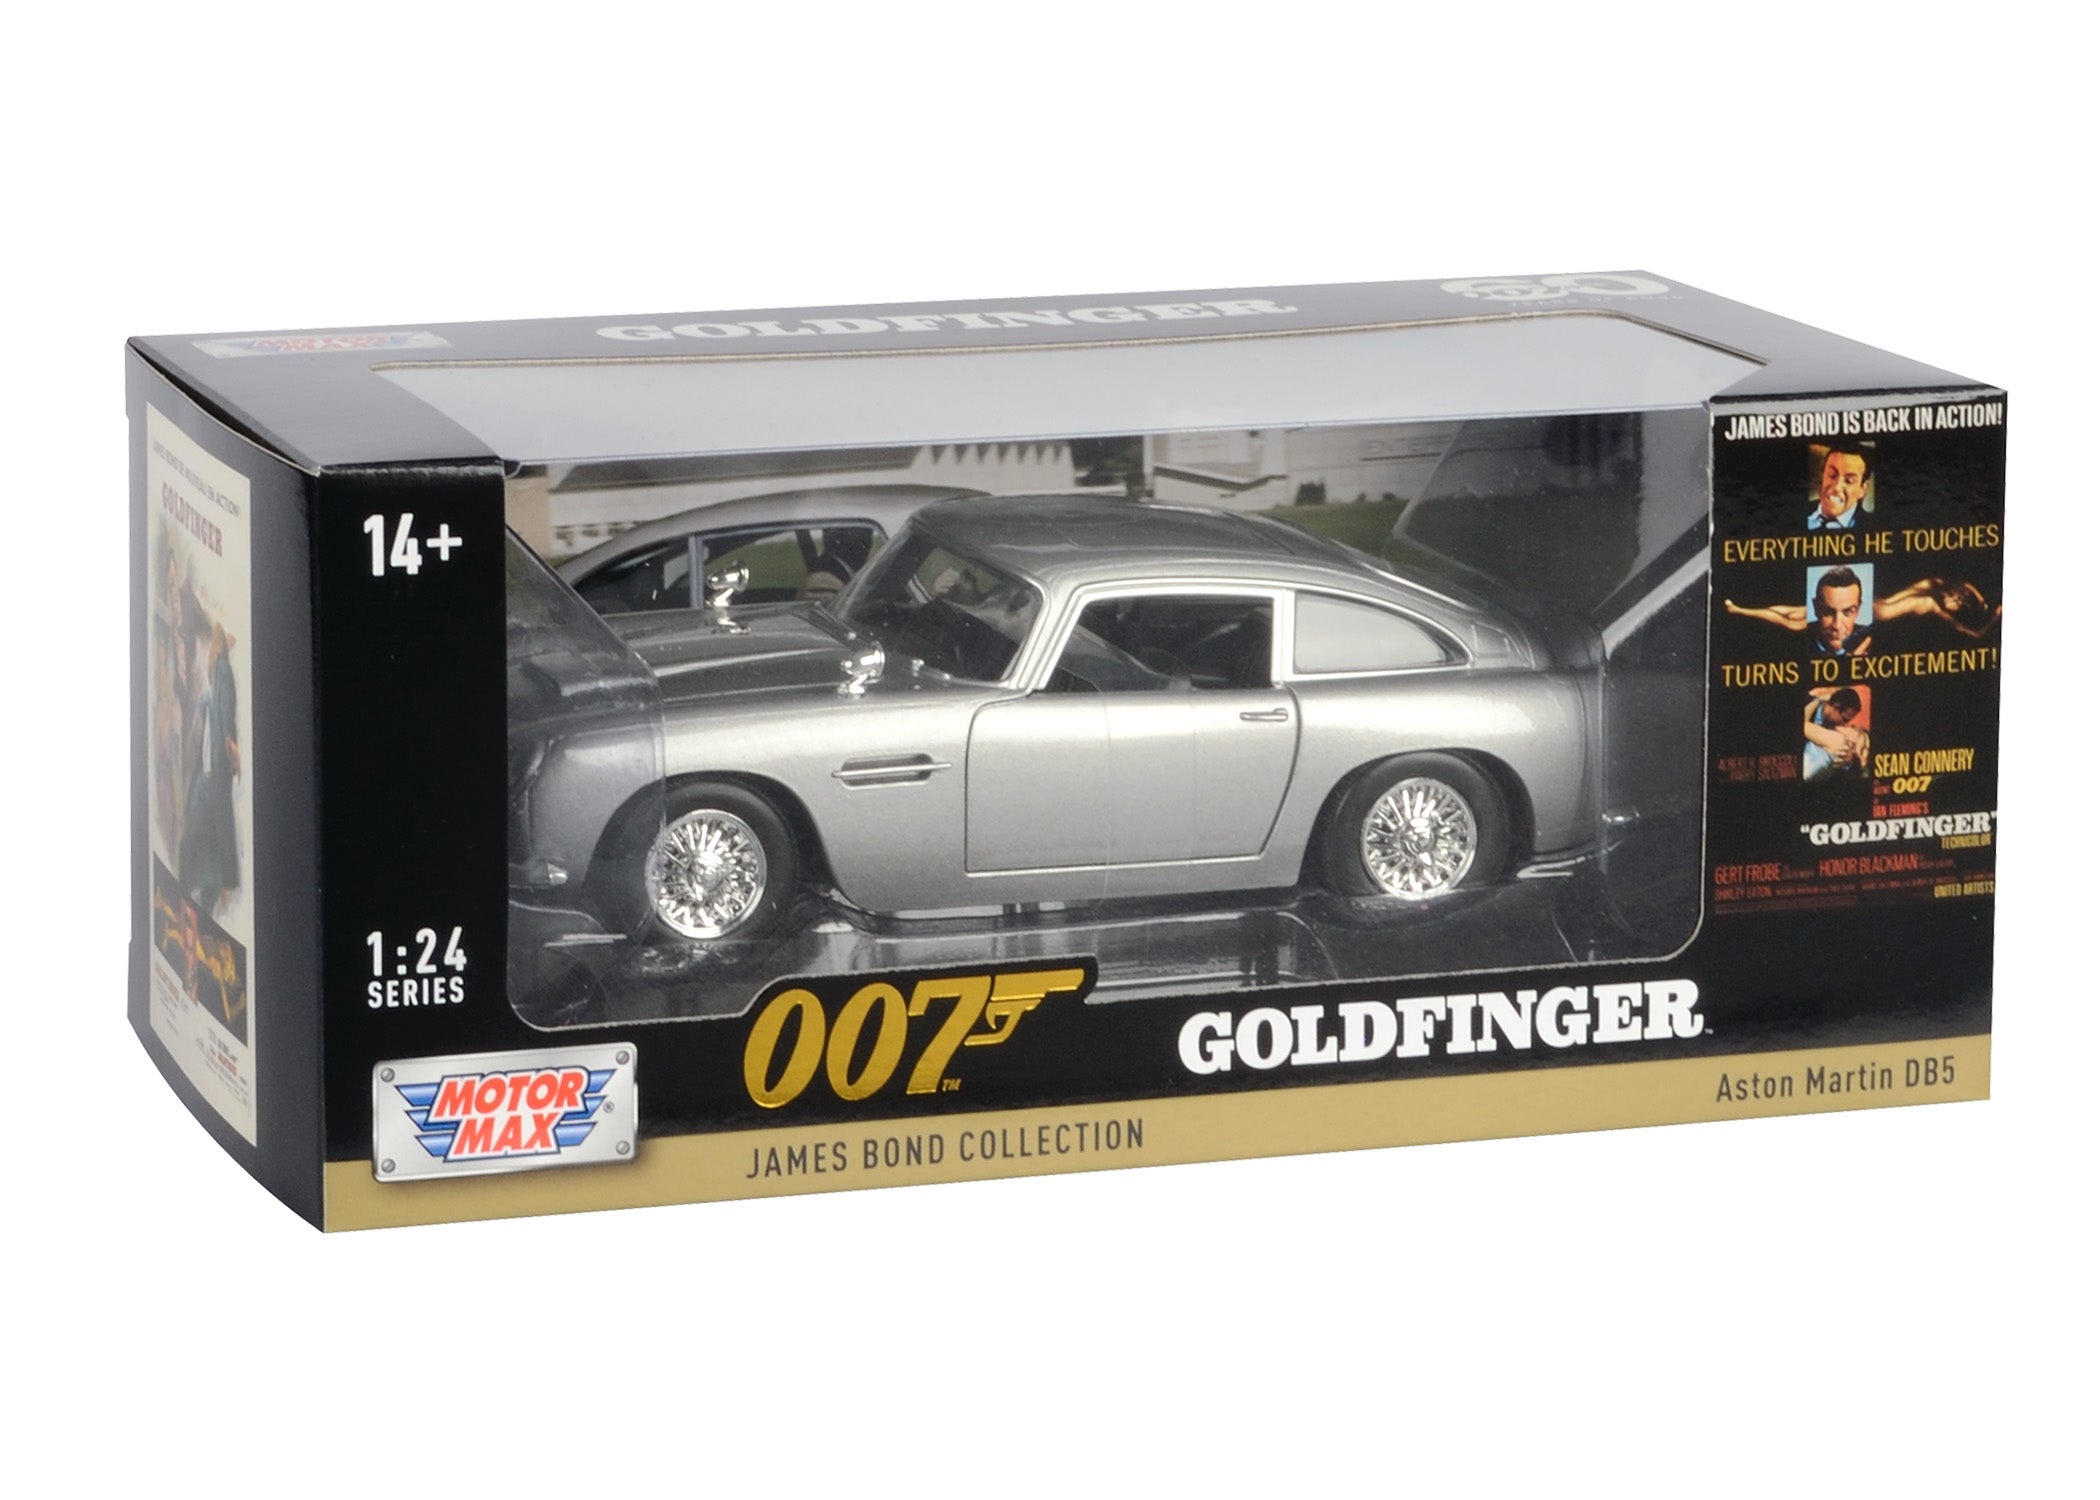 James Bond Goldfinger Aston Martin DB5 Model By Motormax | 007Store